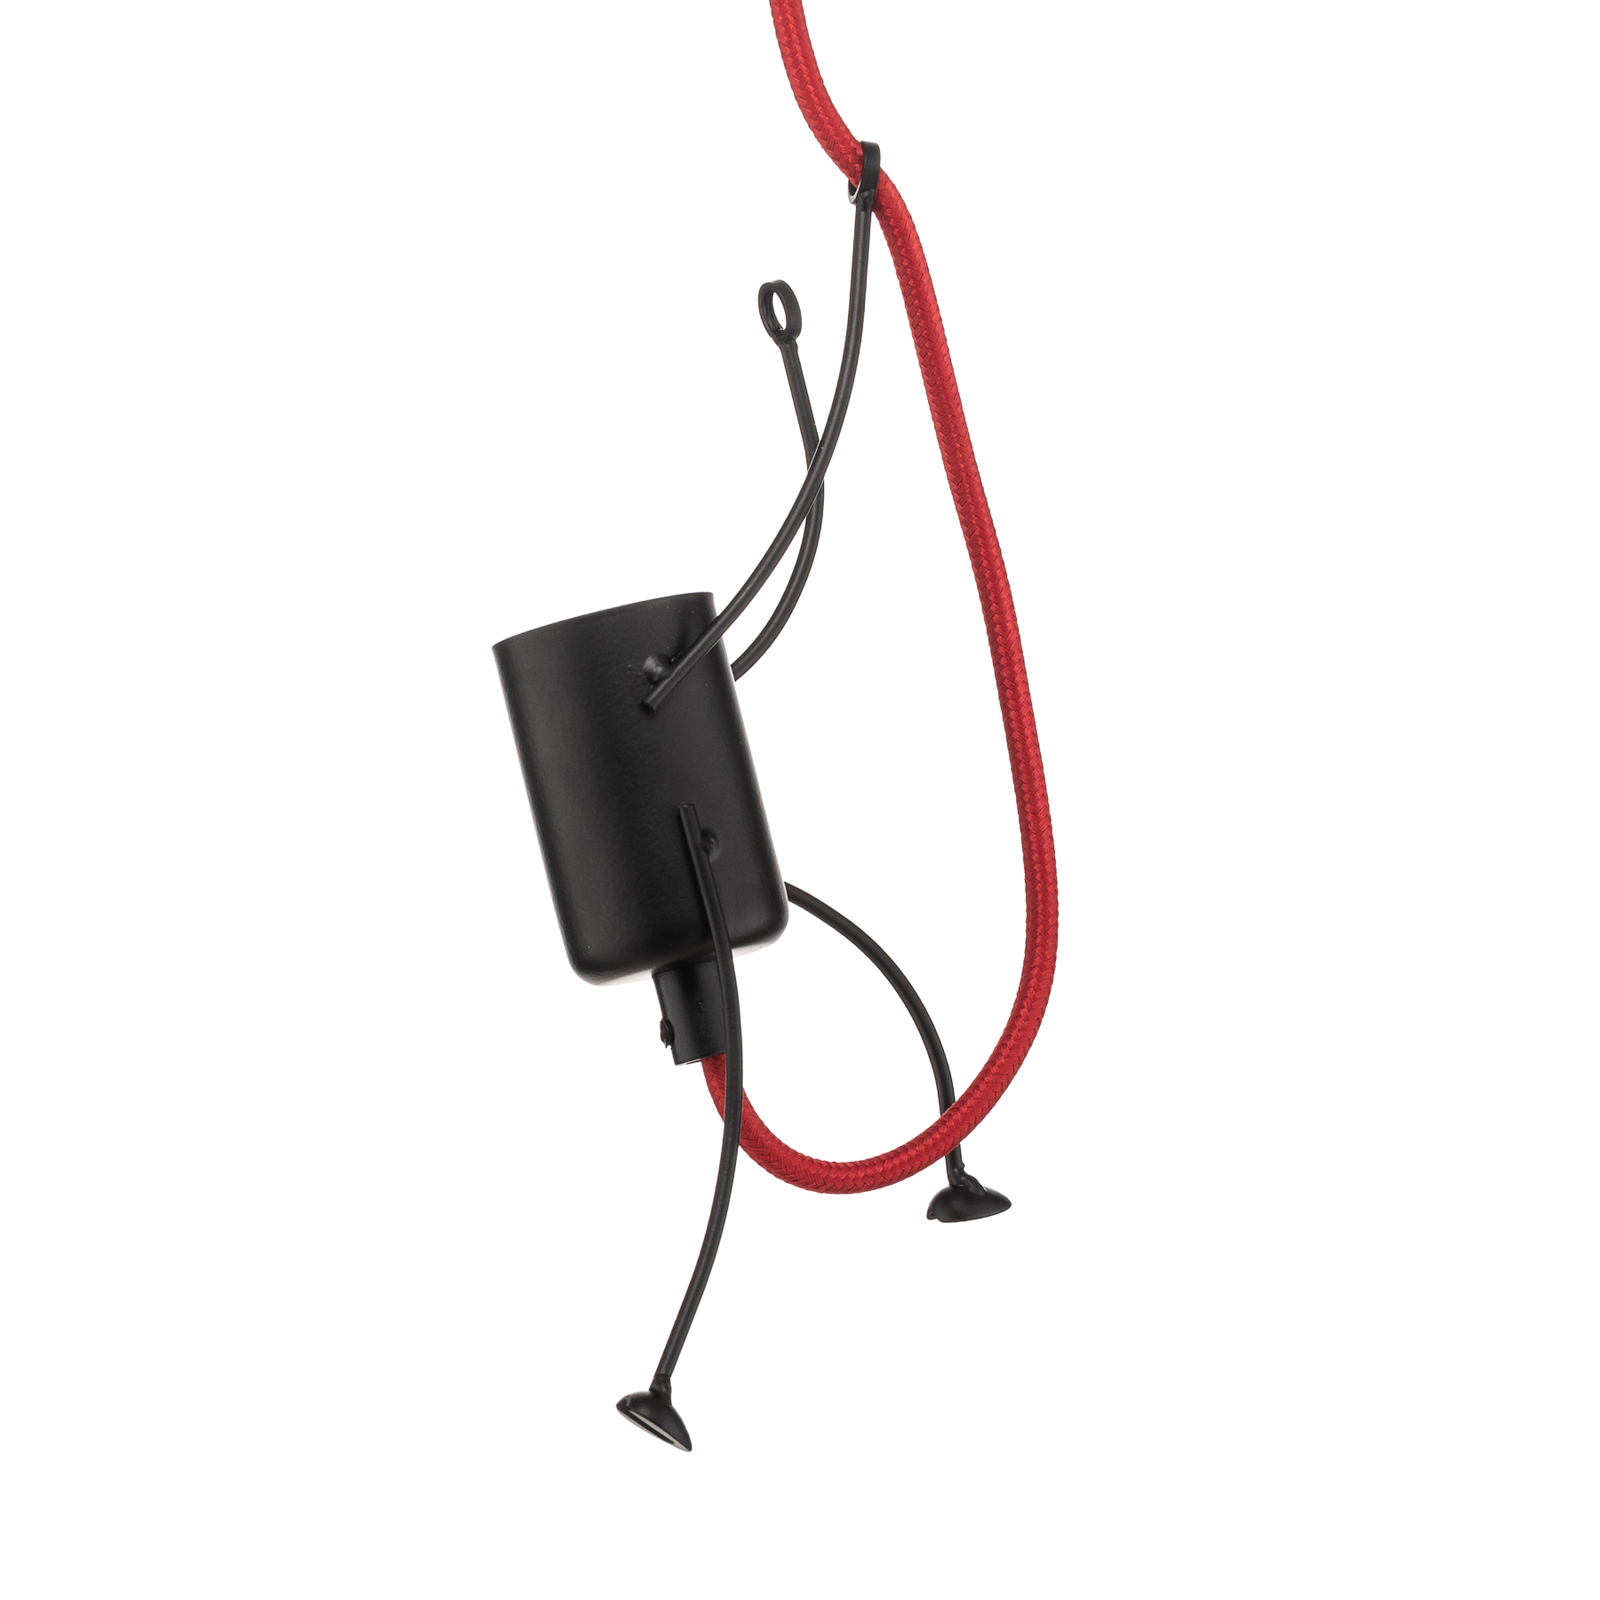 Hengelampe Bobi 1 i svart, rød kabel, 1 lyskilde